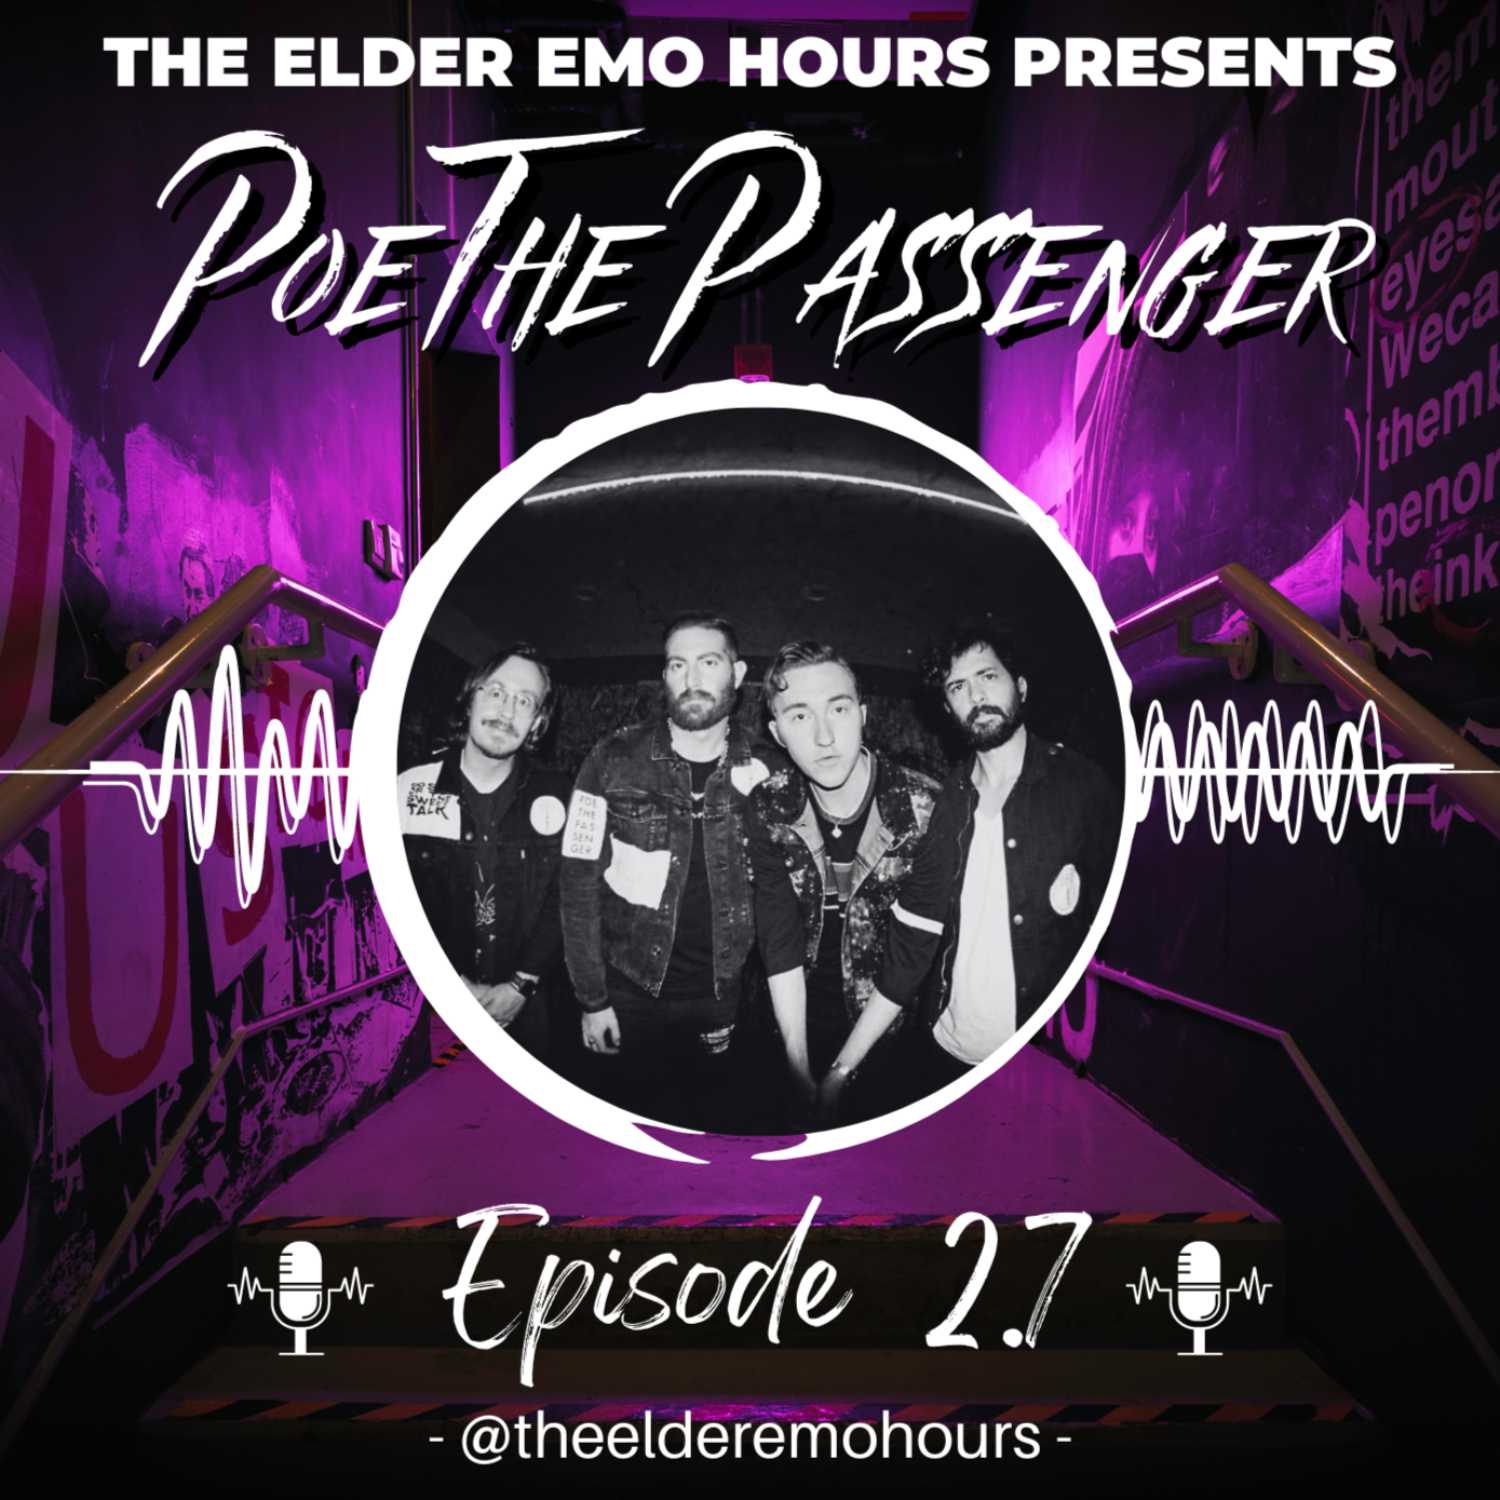 Episode 2.7: Poe The Passenger